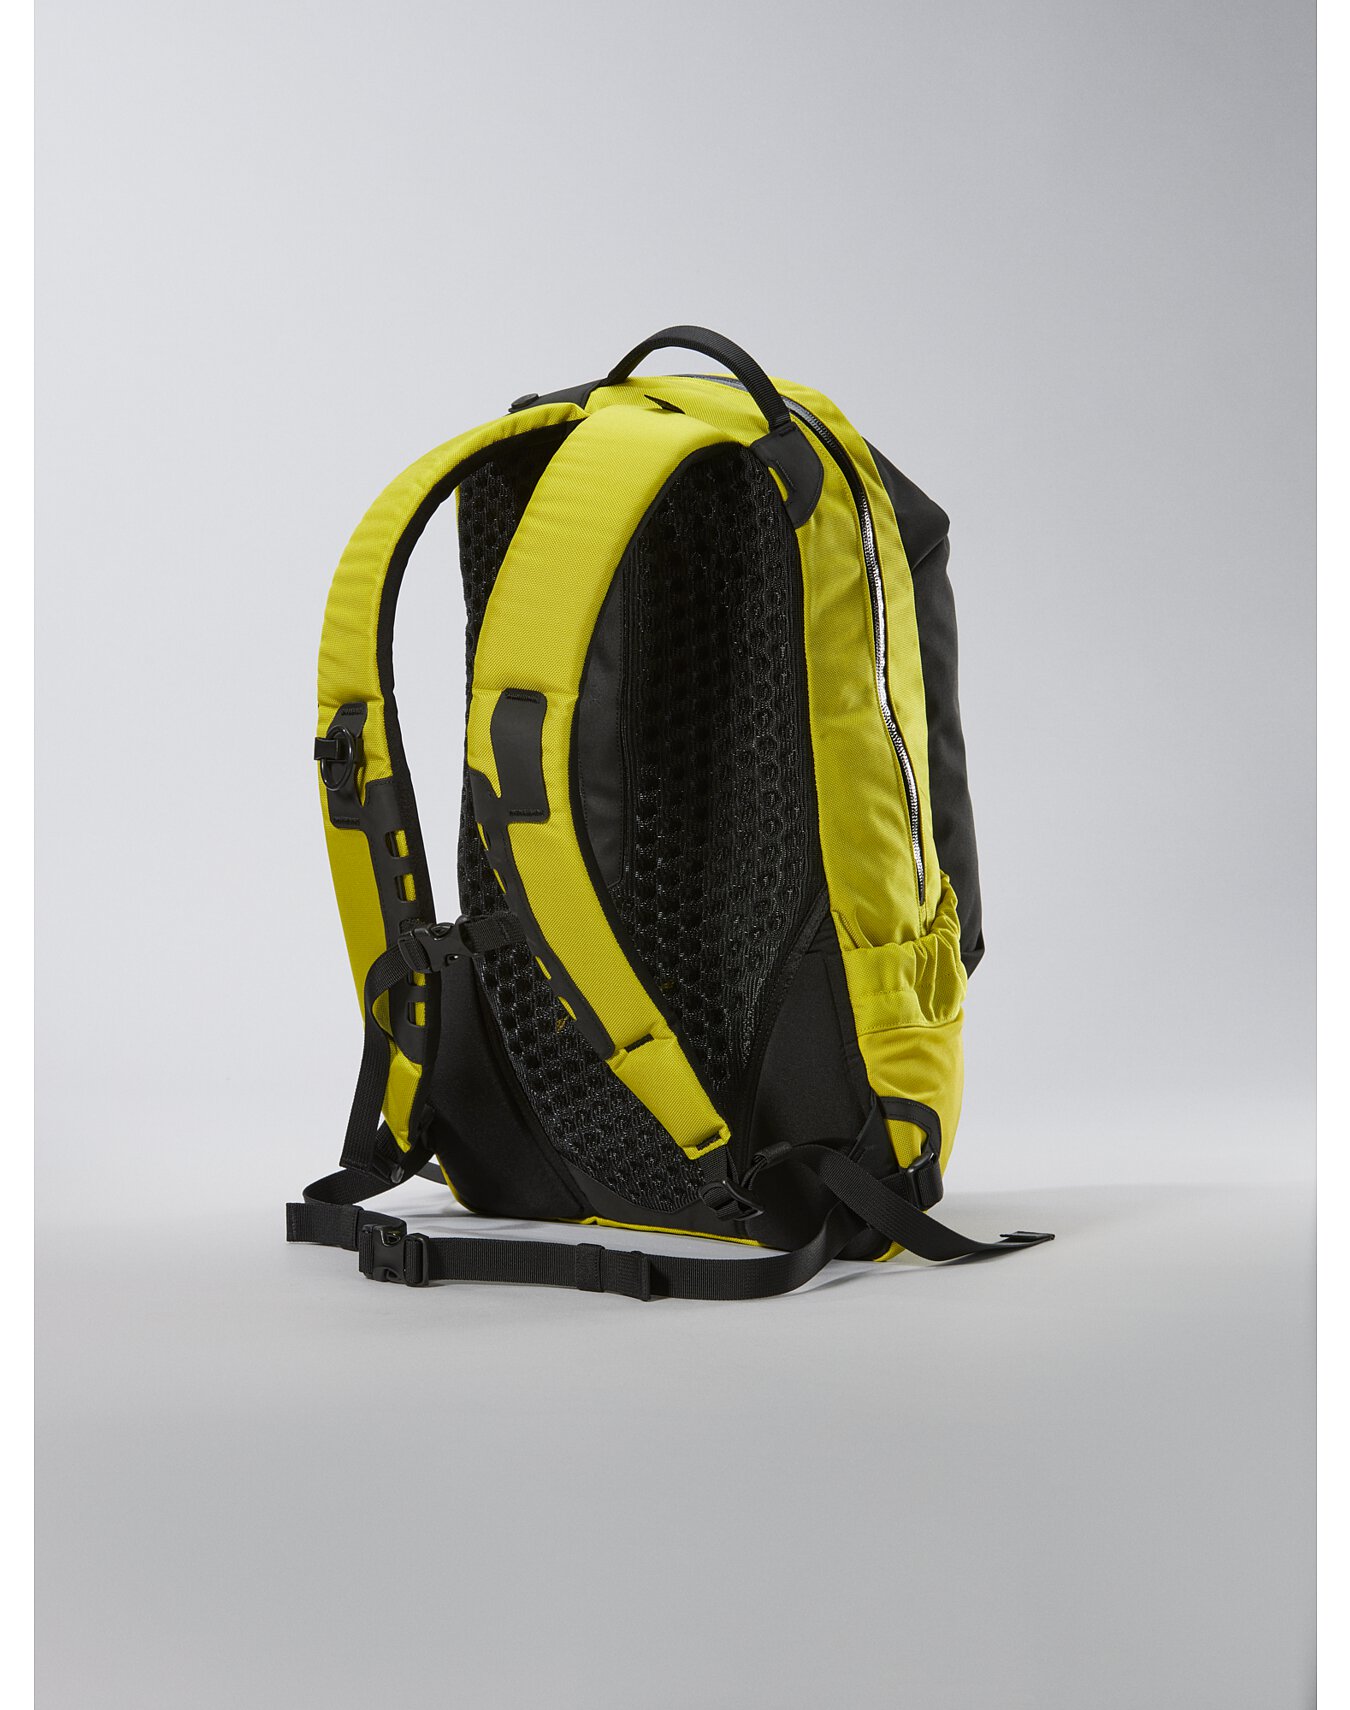 Arro 16 Backpack